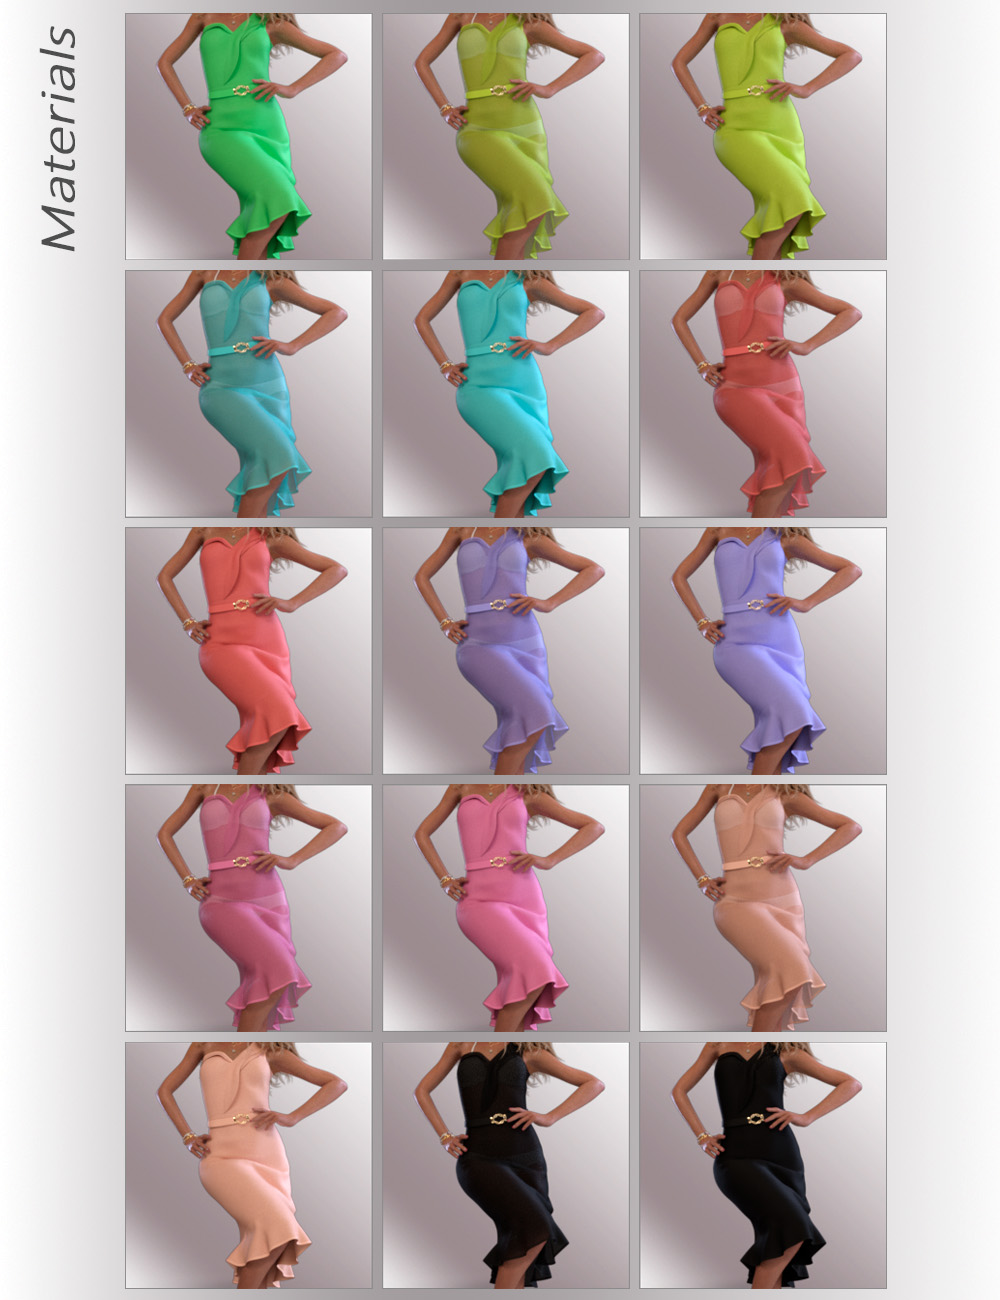 dForce Nola Cocktail Dress outfit for Genesis 8 Female(s) by: OnnelArryn, 3D Models by Daz 3D